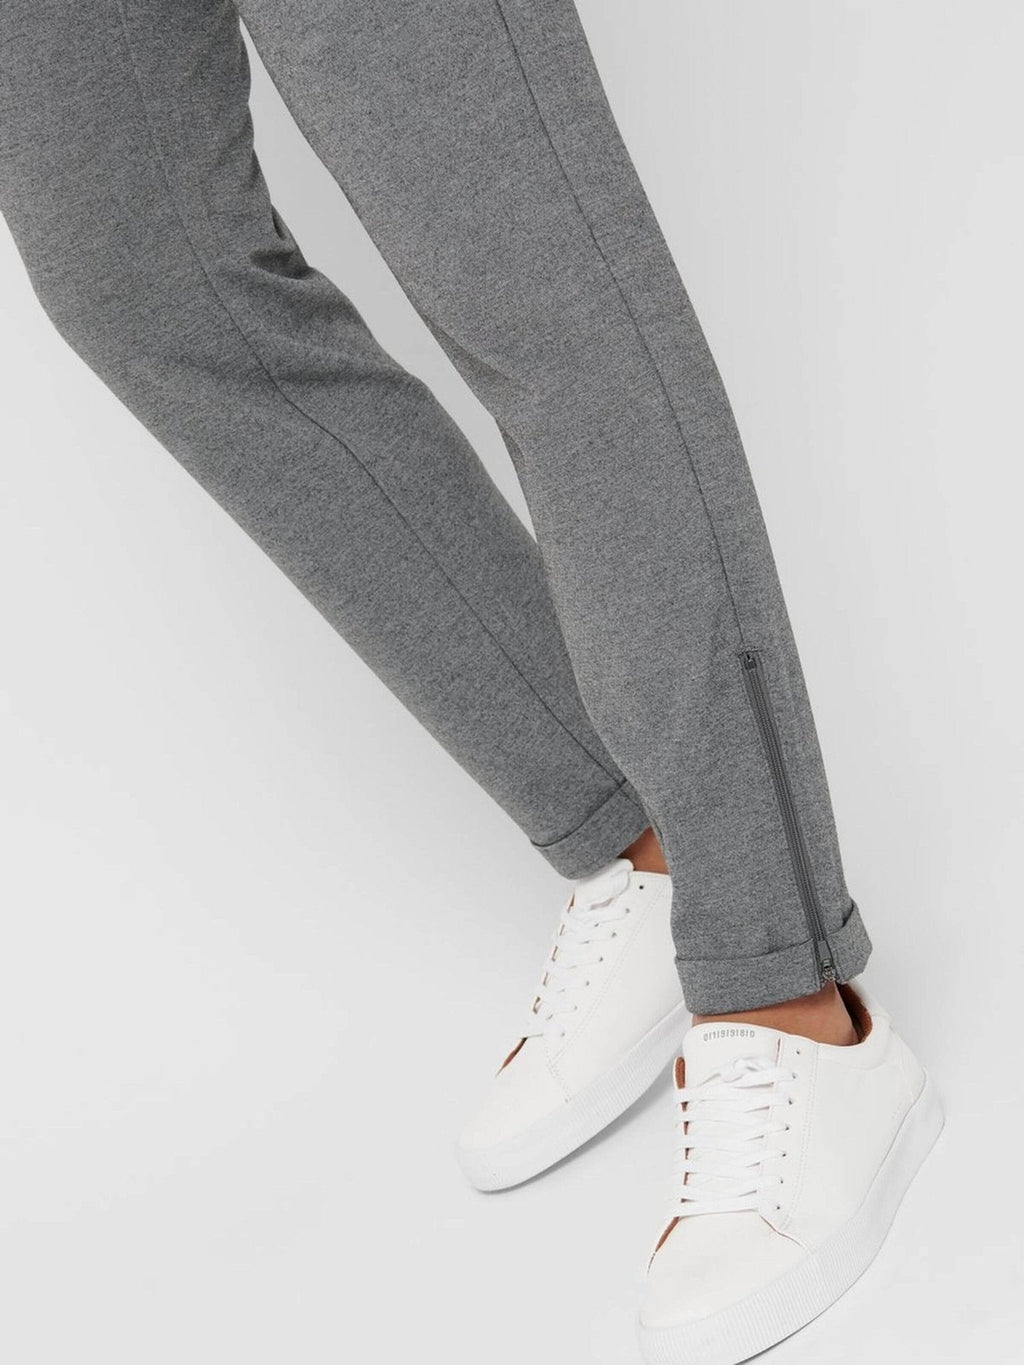 Marcos pantalones laterales - gris claro